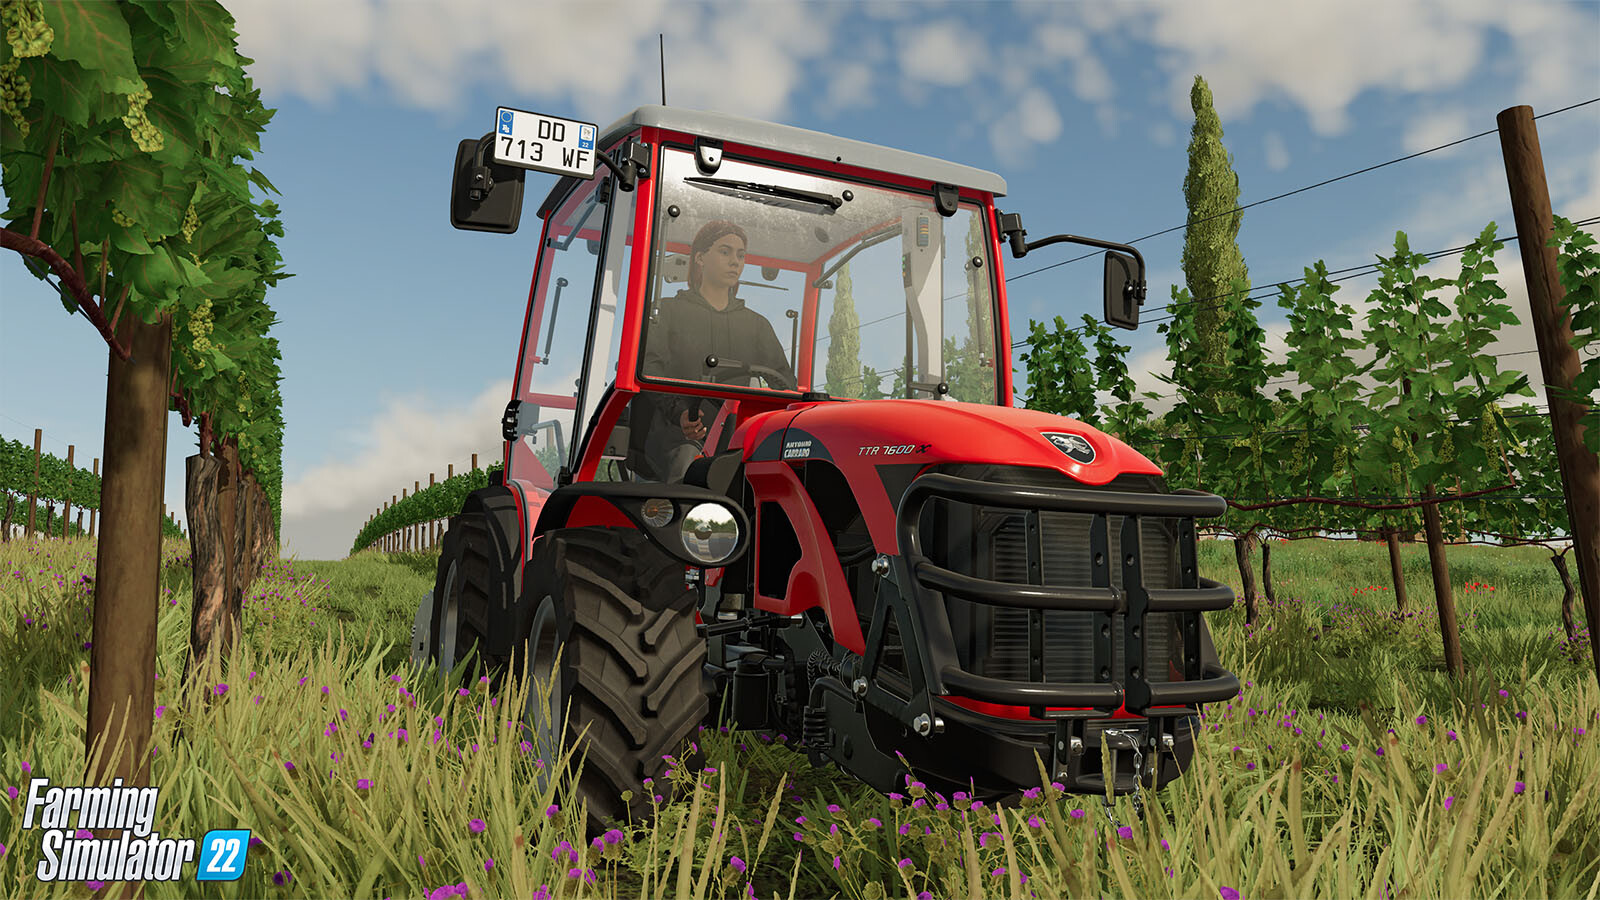 Farming Simulator 22 - Year 1 Season Pass Steam Key für PC und Mac